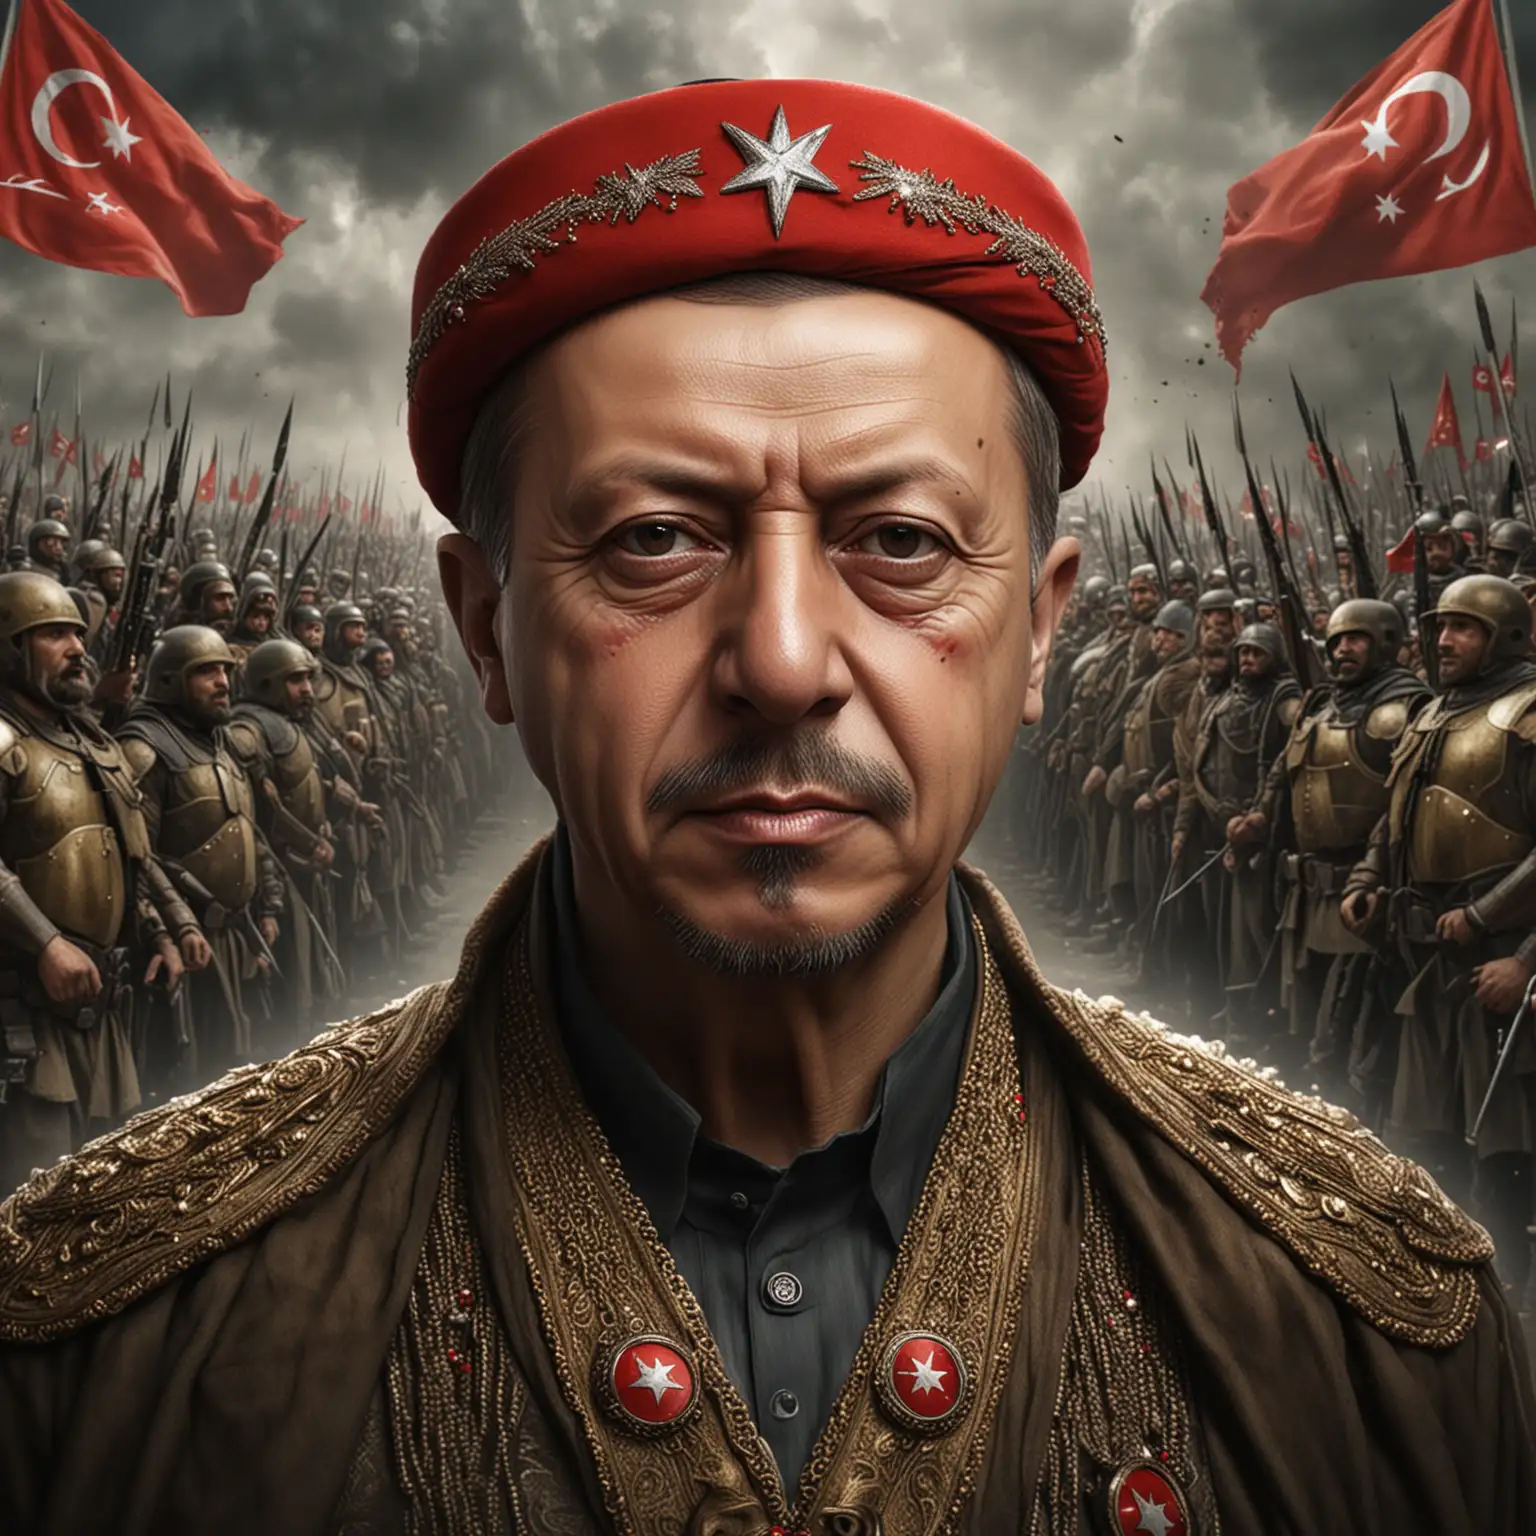 Erdogan Portrayal of a Controversial Figure